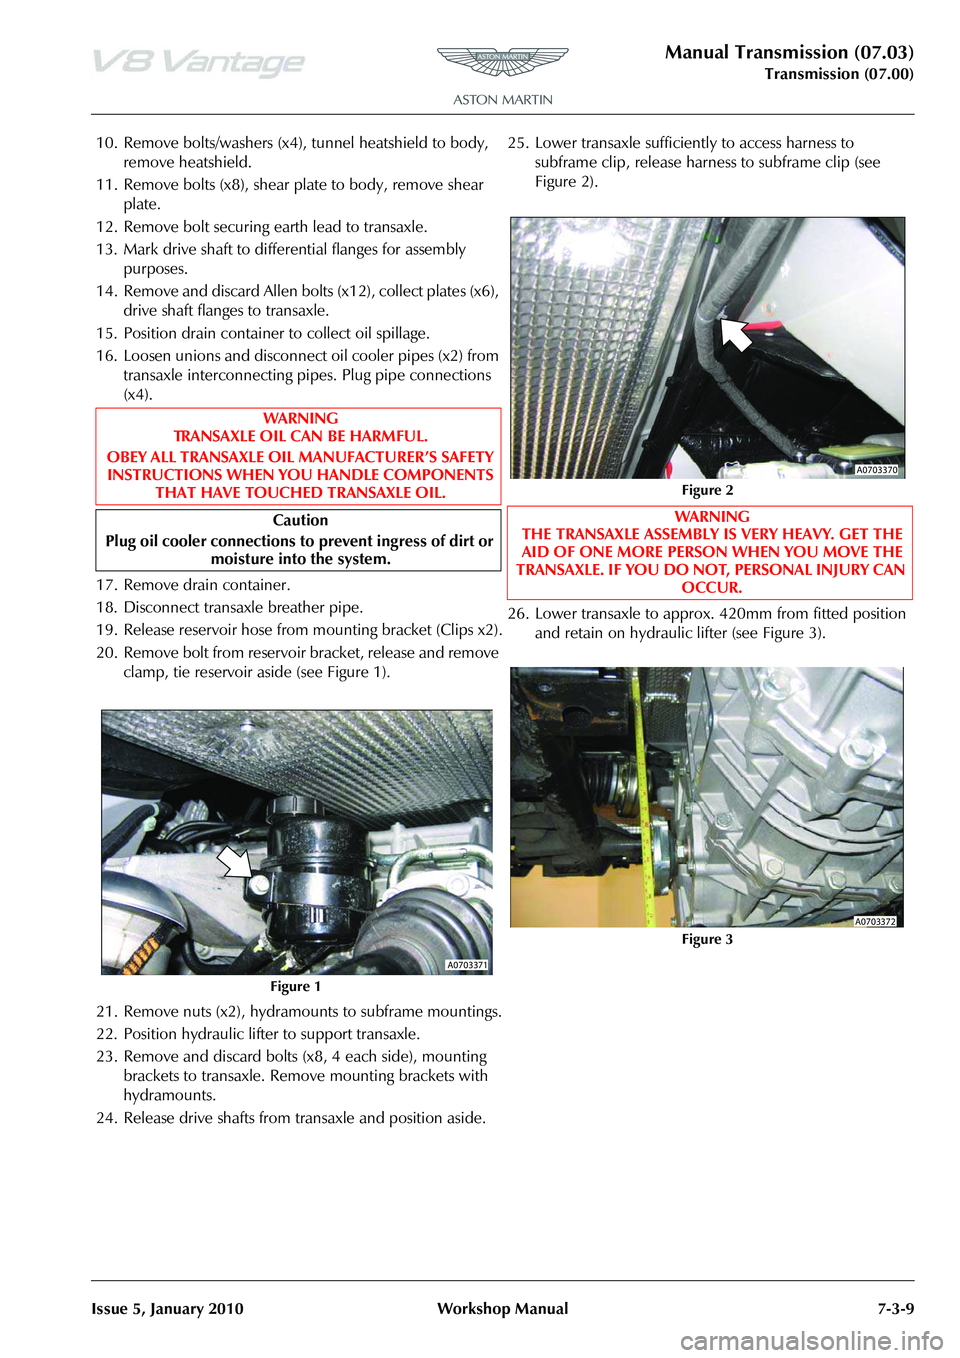 ASTON MARTIN V8 VANTAGE 2010  Workshop Manual Manual Transmission (07.03)
Transmission (07.00)
Issue 5, January 2010 Workshop Manual 7-3-9
10. Remove bolts/washers (x4), tunnel heatshield to body,  remove heatshield.
11. Remove bolts (x8), shear 